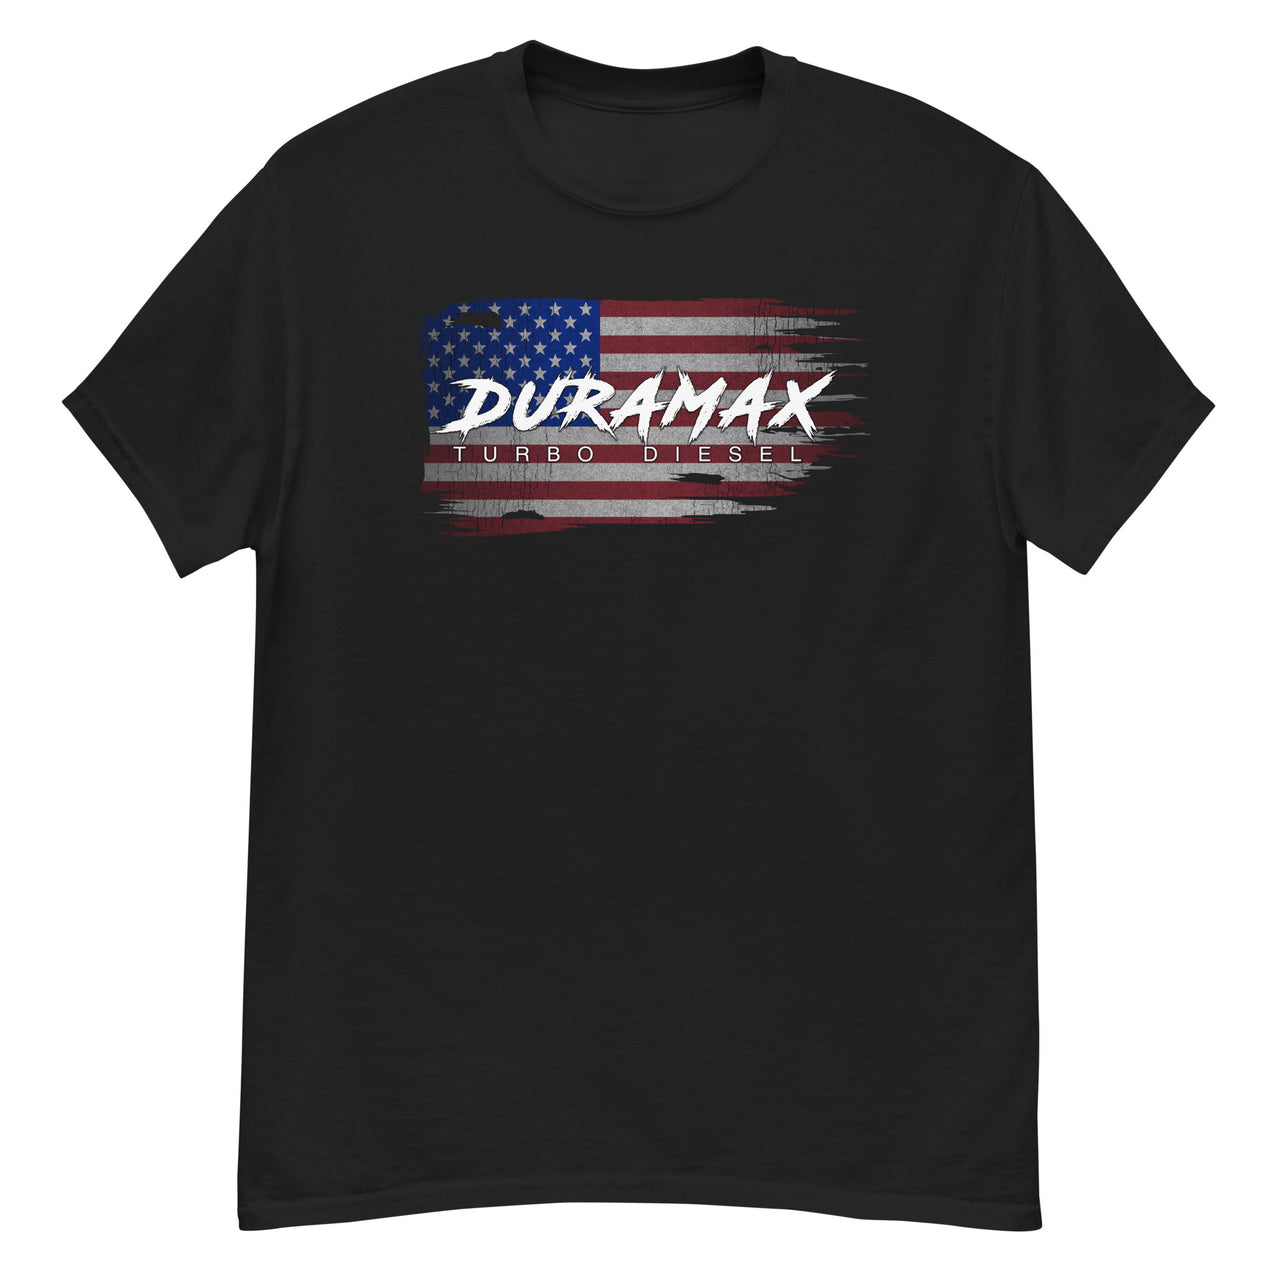 Duramax Diesel T-Shirt American Flag Shirt in black